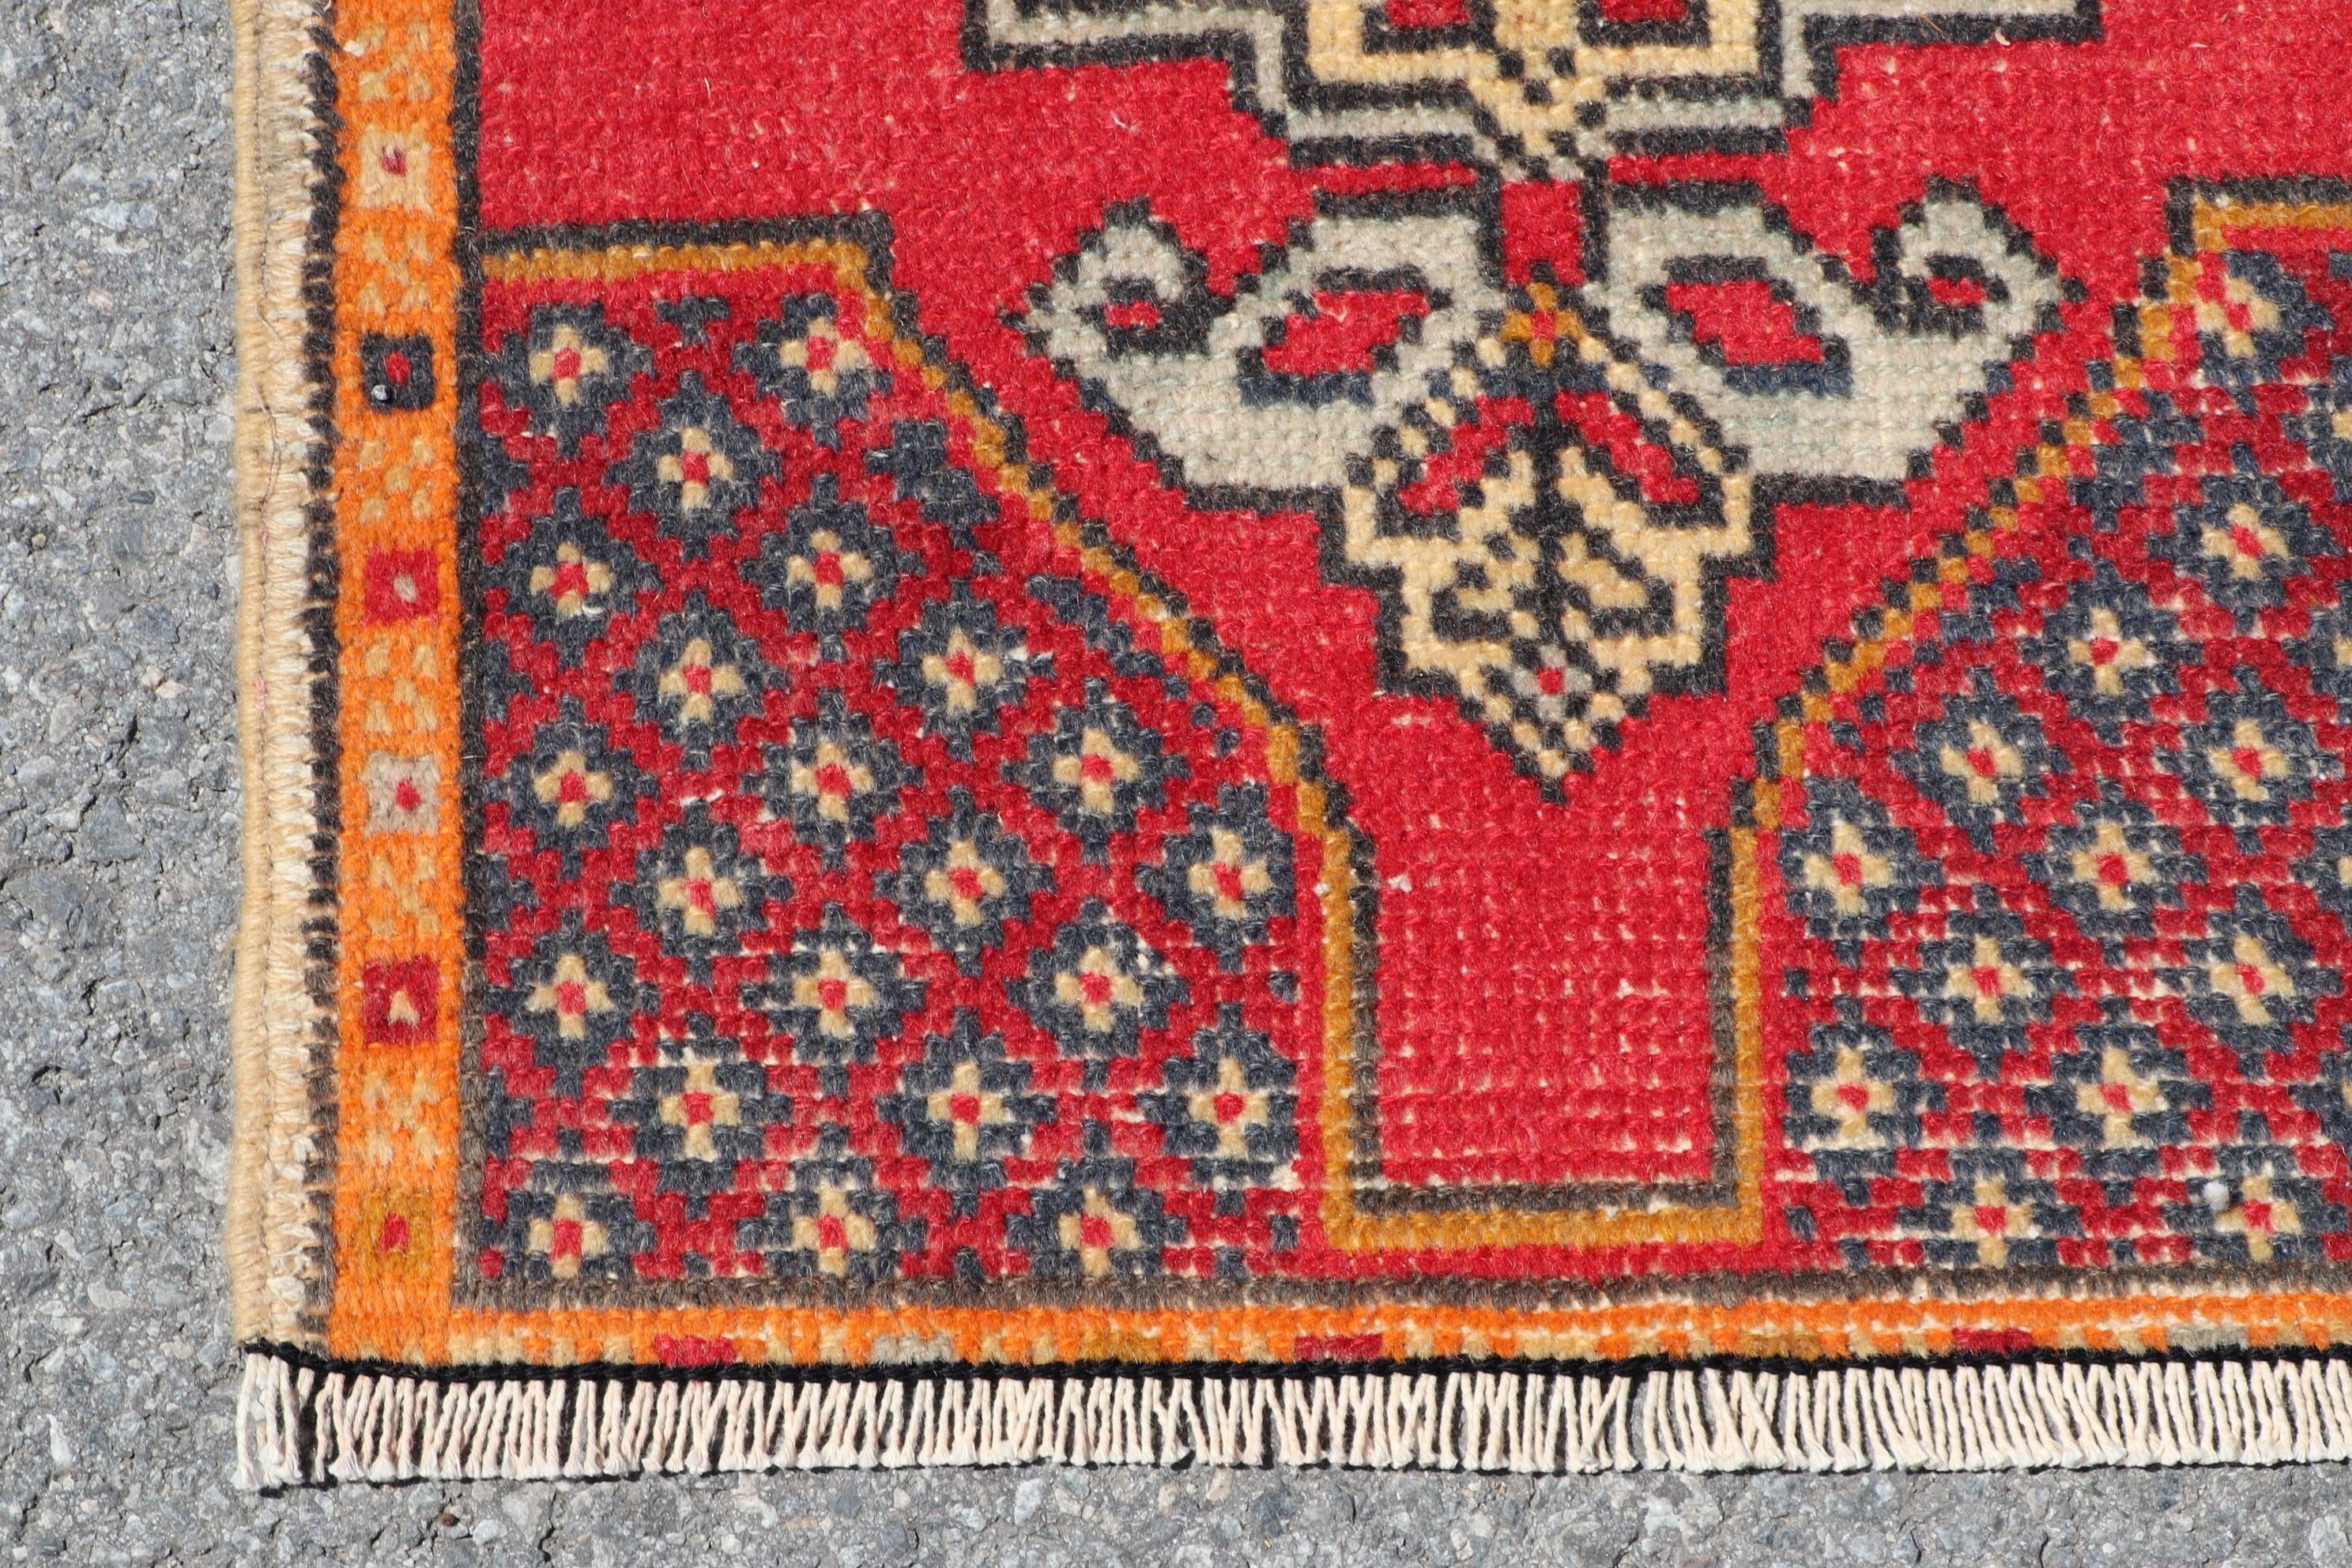 Entry Rug, Red Antique Rug, Rugs for Nursery, Bathroom Rug, Antique Rug, Anatolian Rug, Turkish Rug, Vintage Rug, 1.5x2.9 ft Small Rug